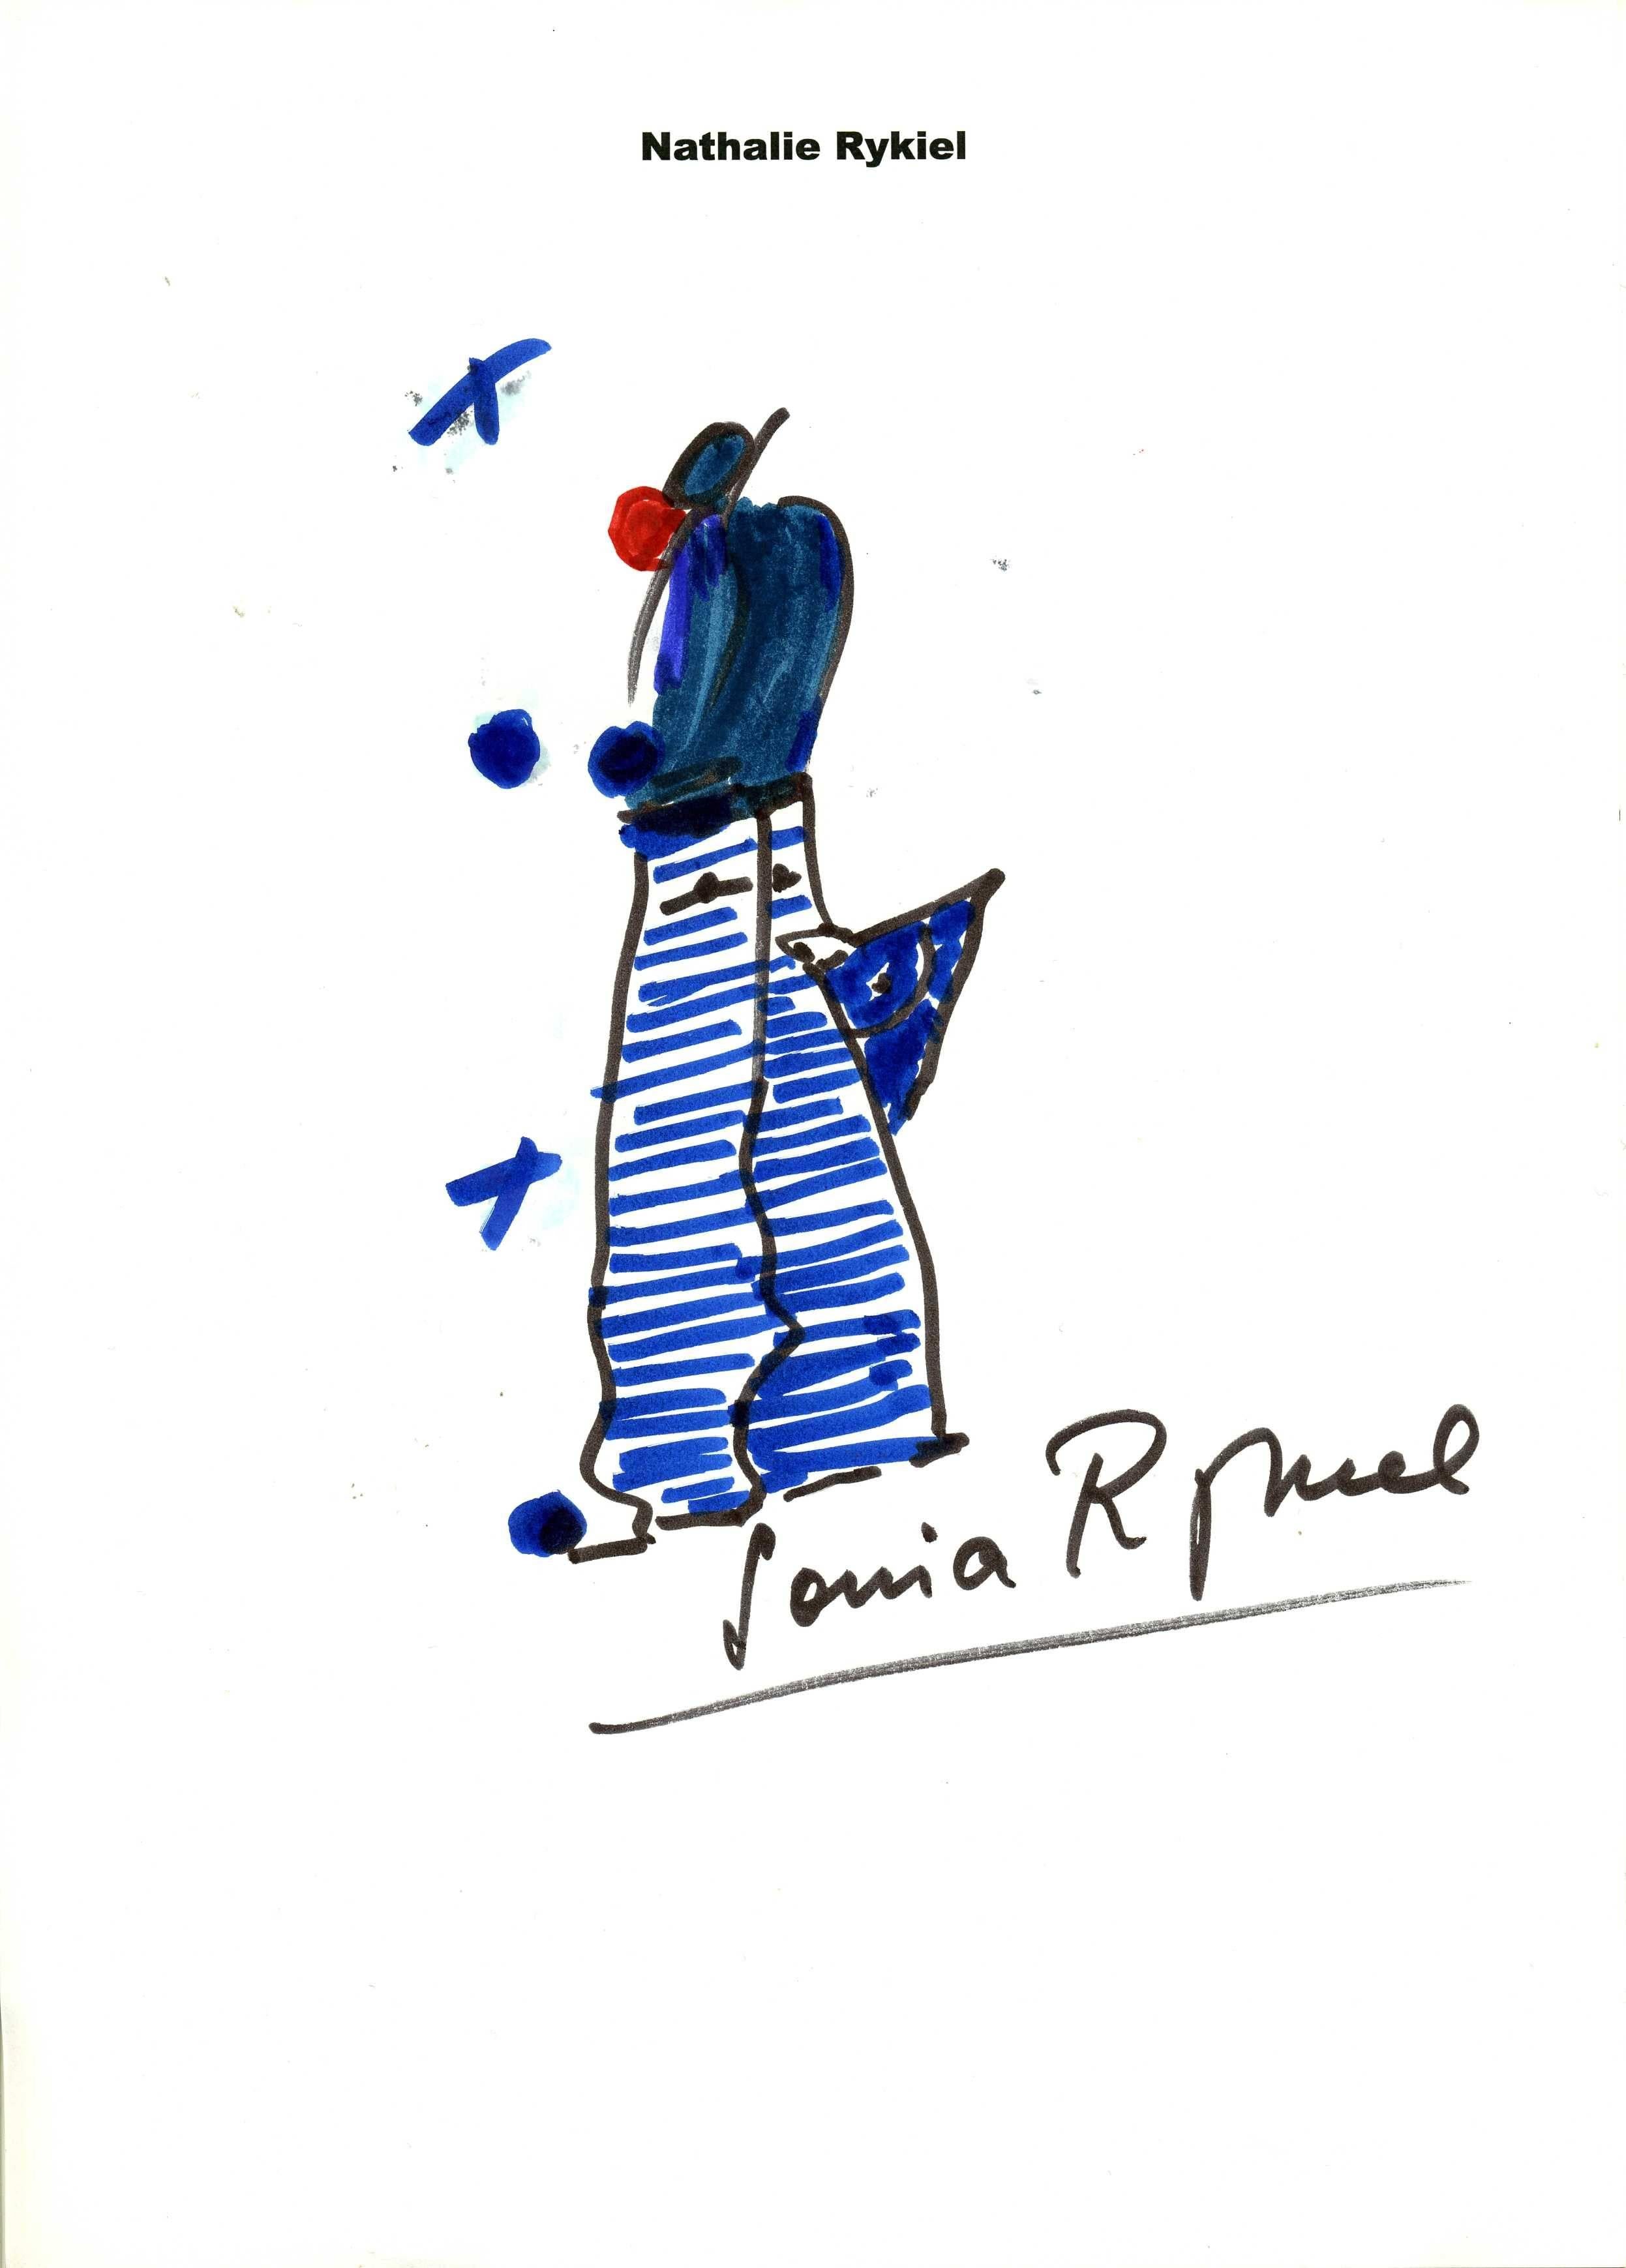 French Fashion designer Sonia Rykiel Personal Drawing
2000's